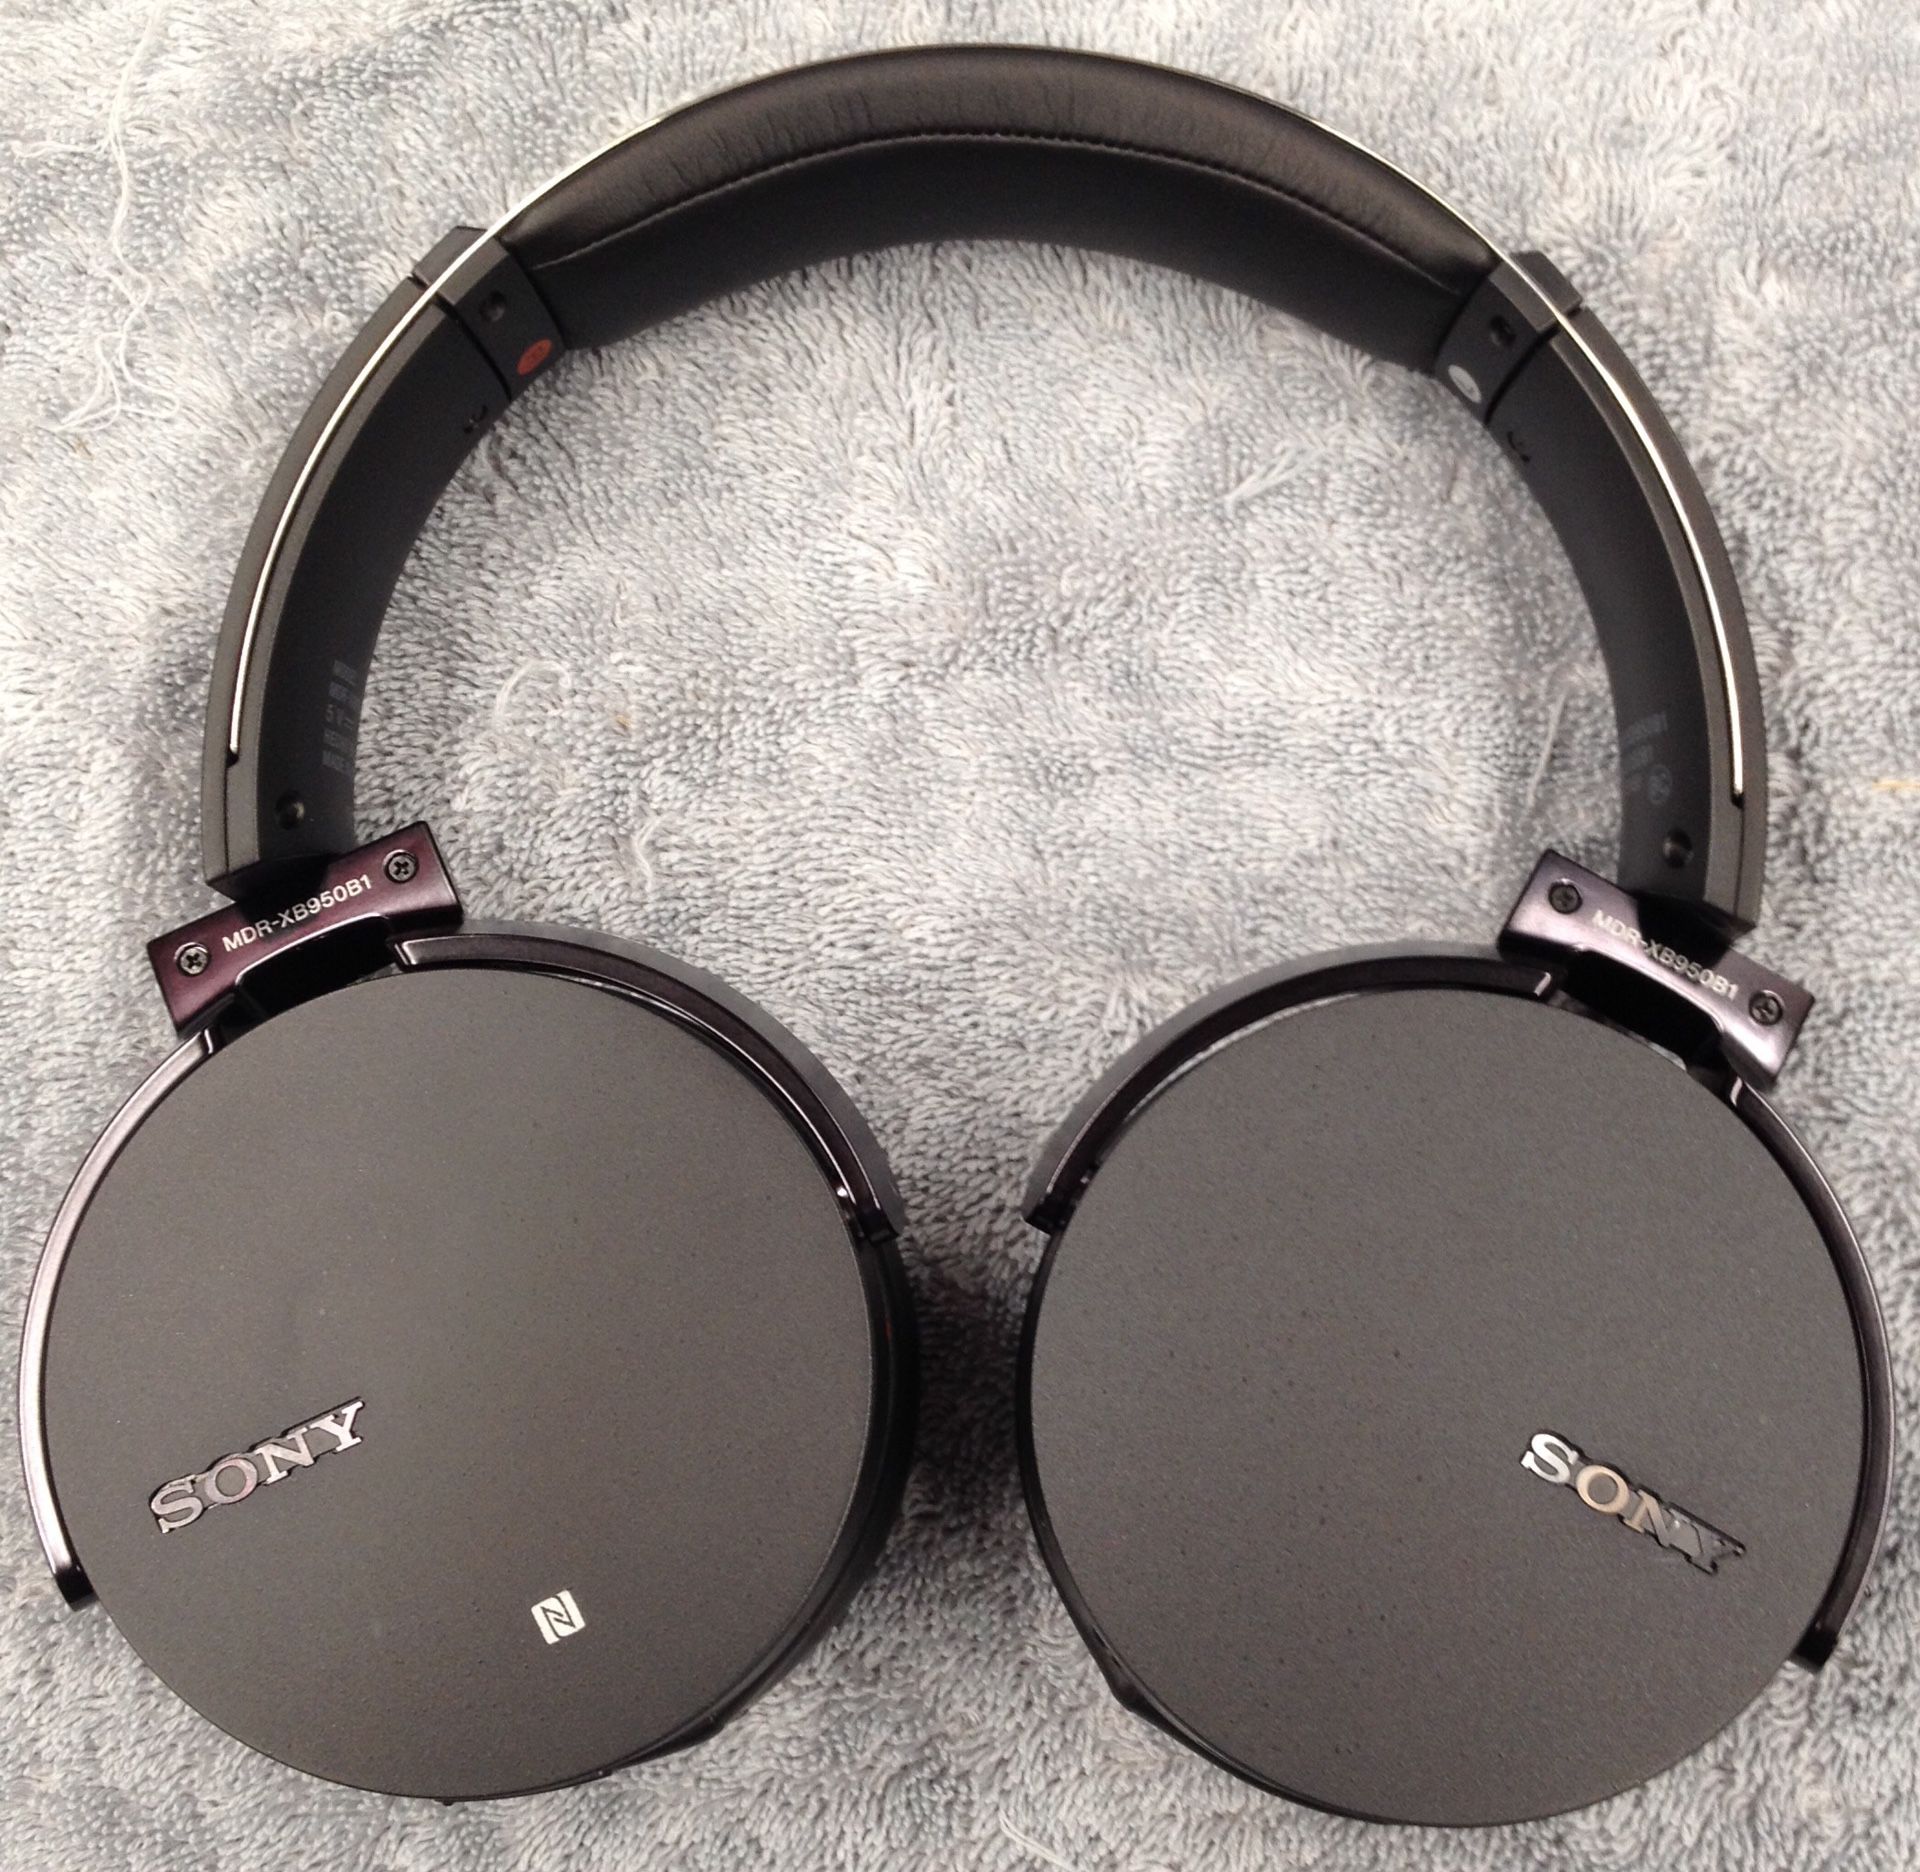 Sony MDR-950 EXTRA BASS Bluetooth Headphones